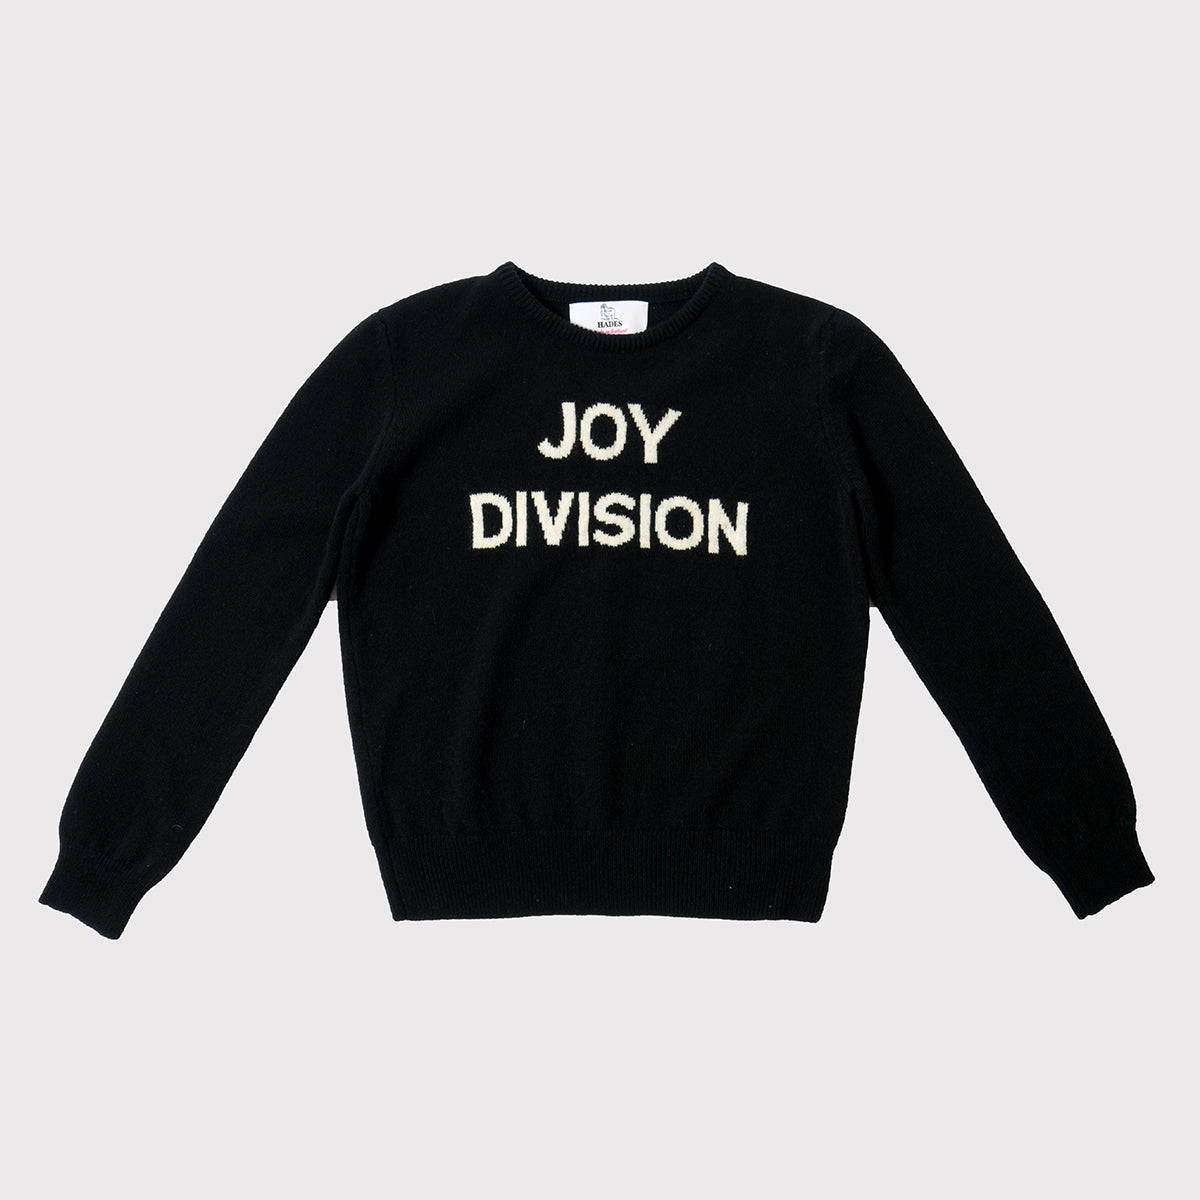 Joy Division | Black & White | Women's